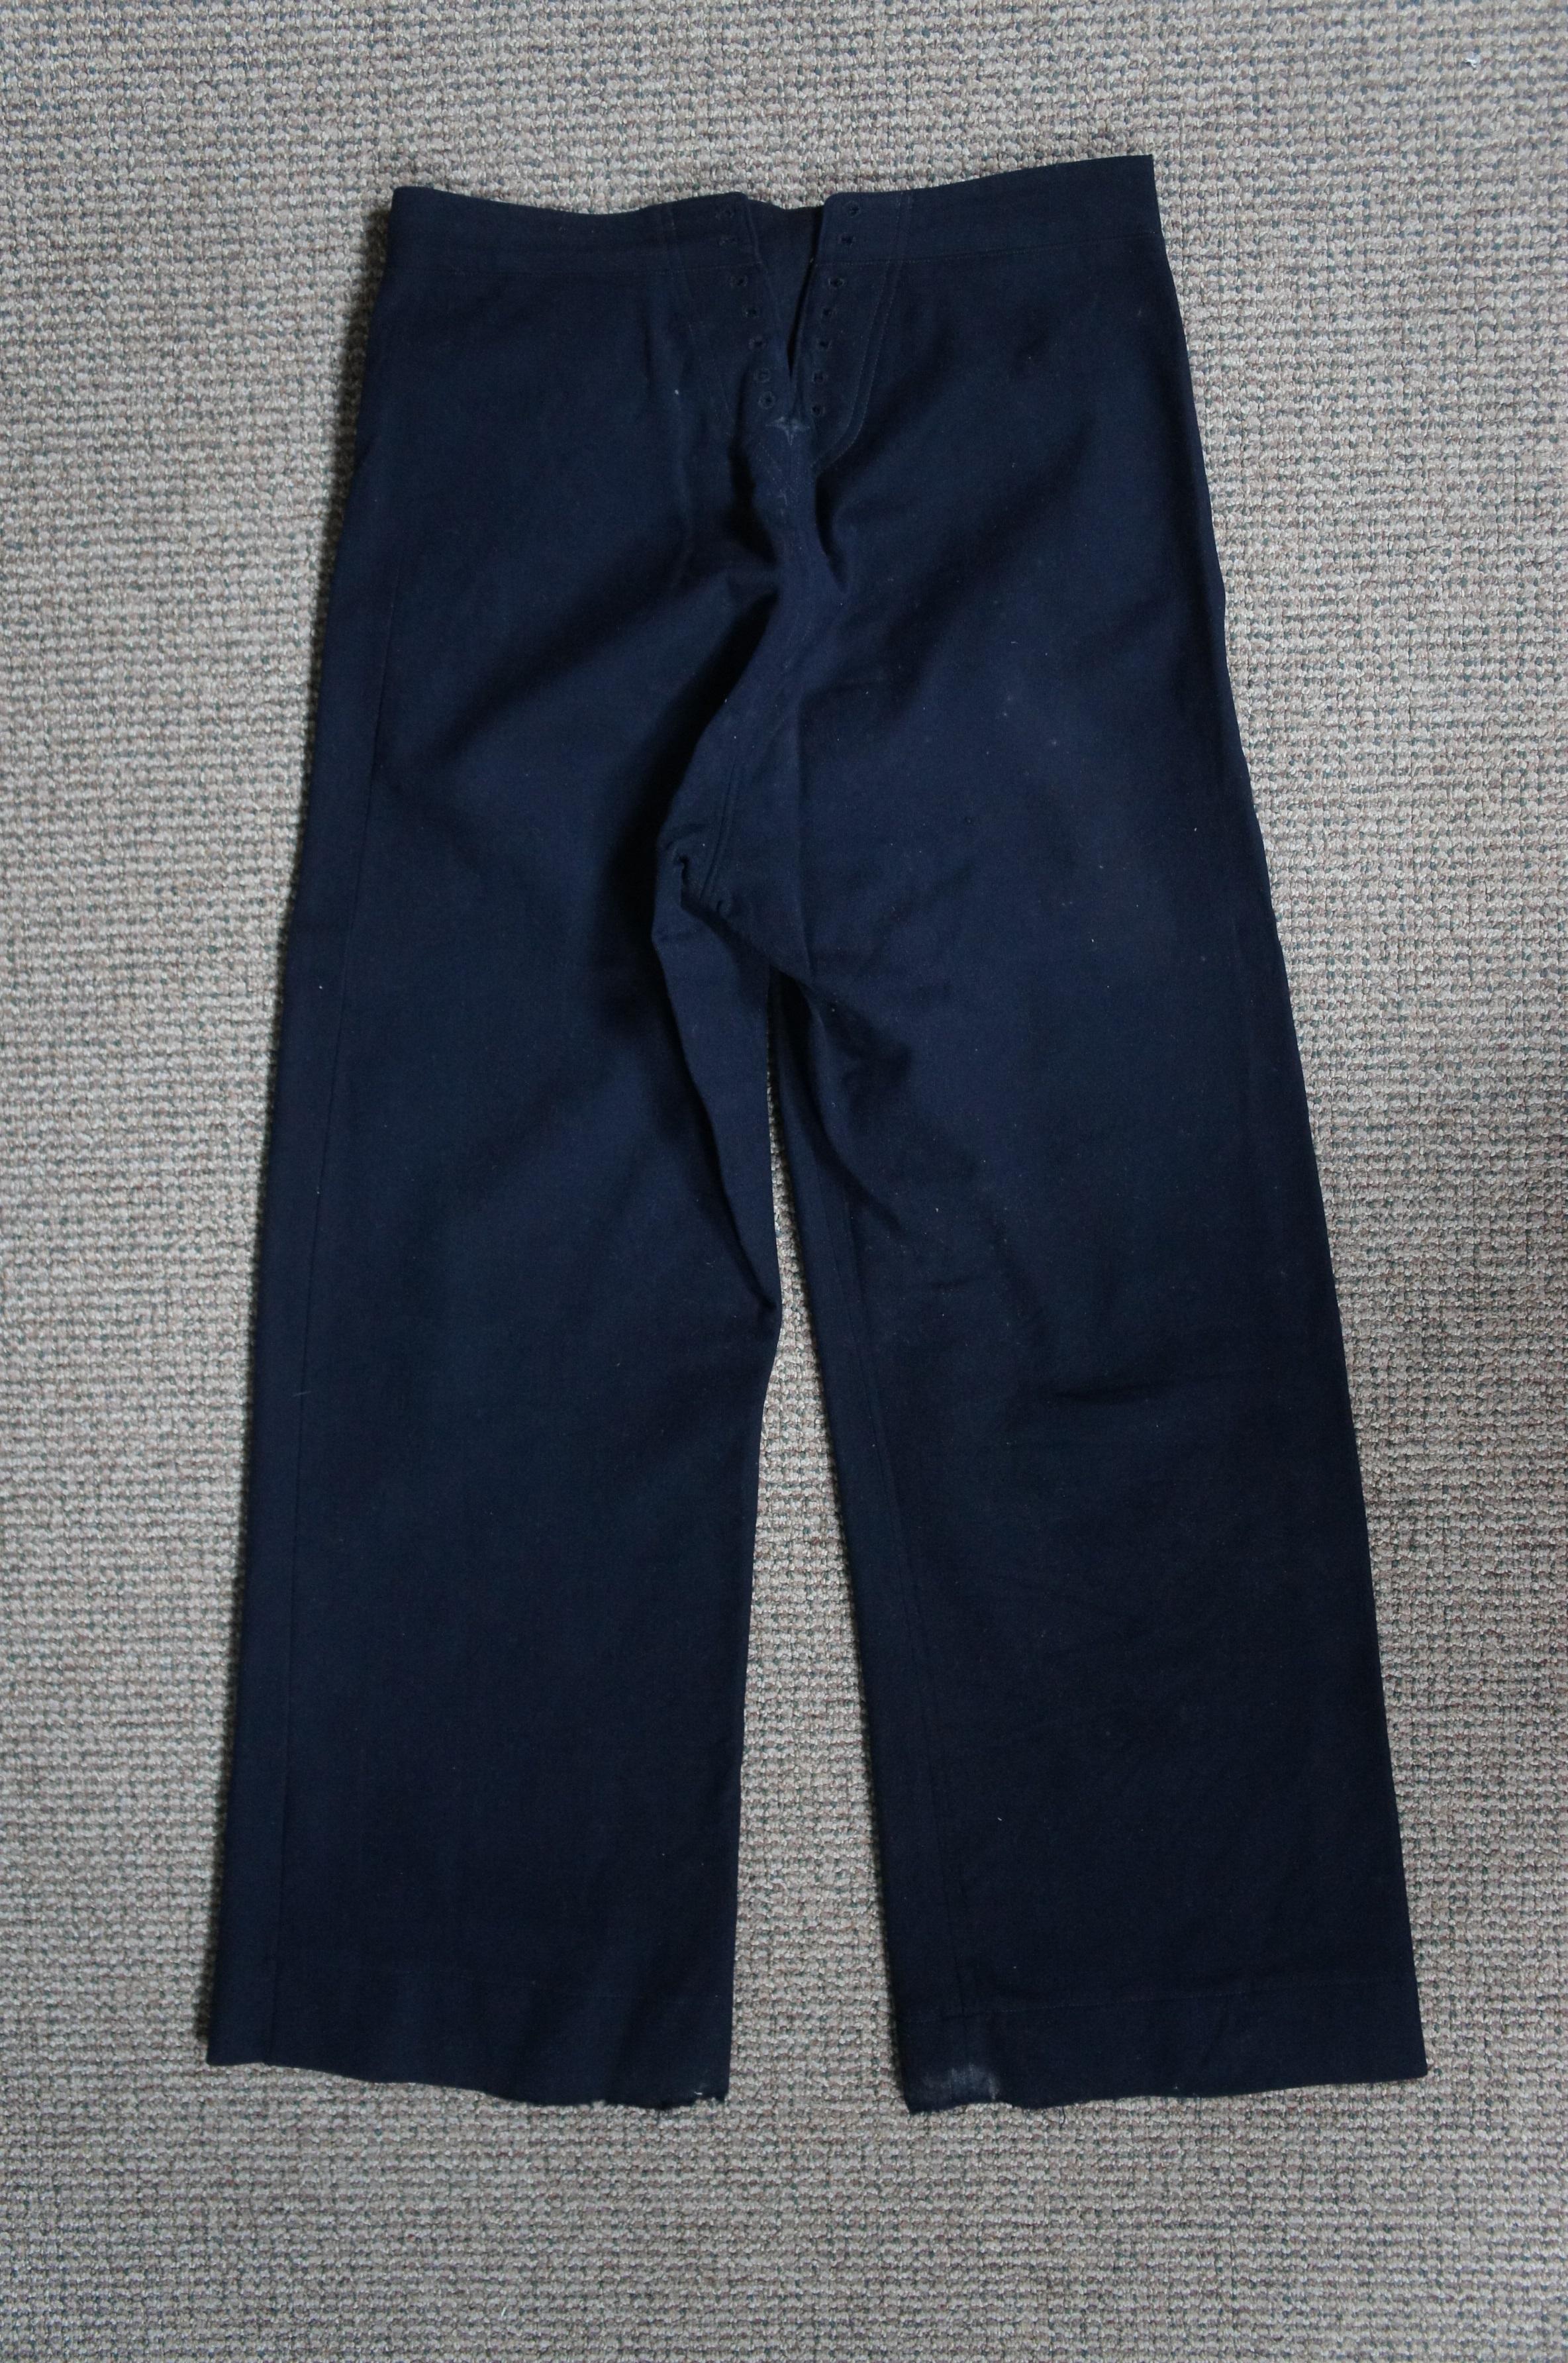 3 Pc Mid Century US Navy Blue Wool Uniform Jumper Pants Cracker Jack For Sale 4